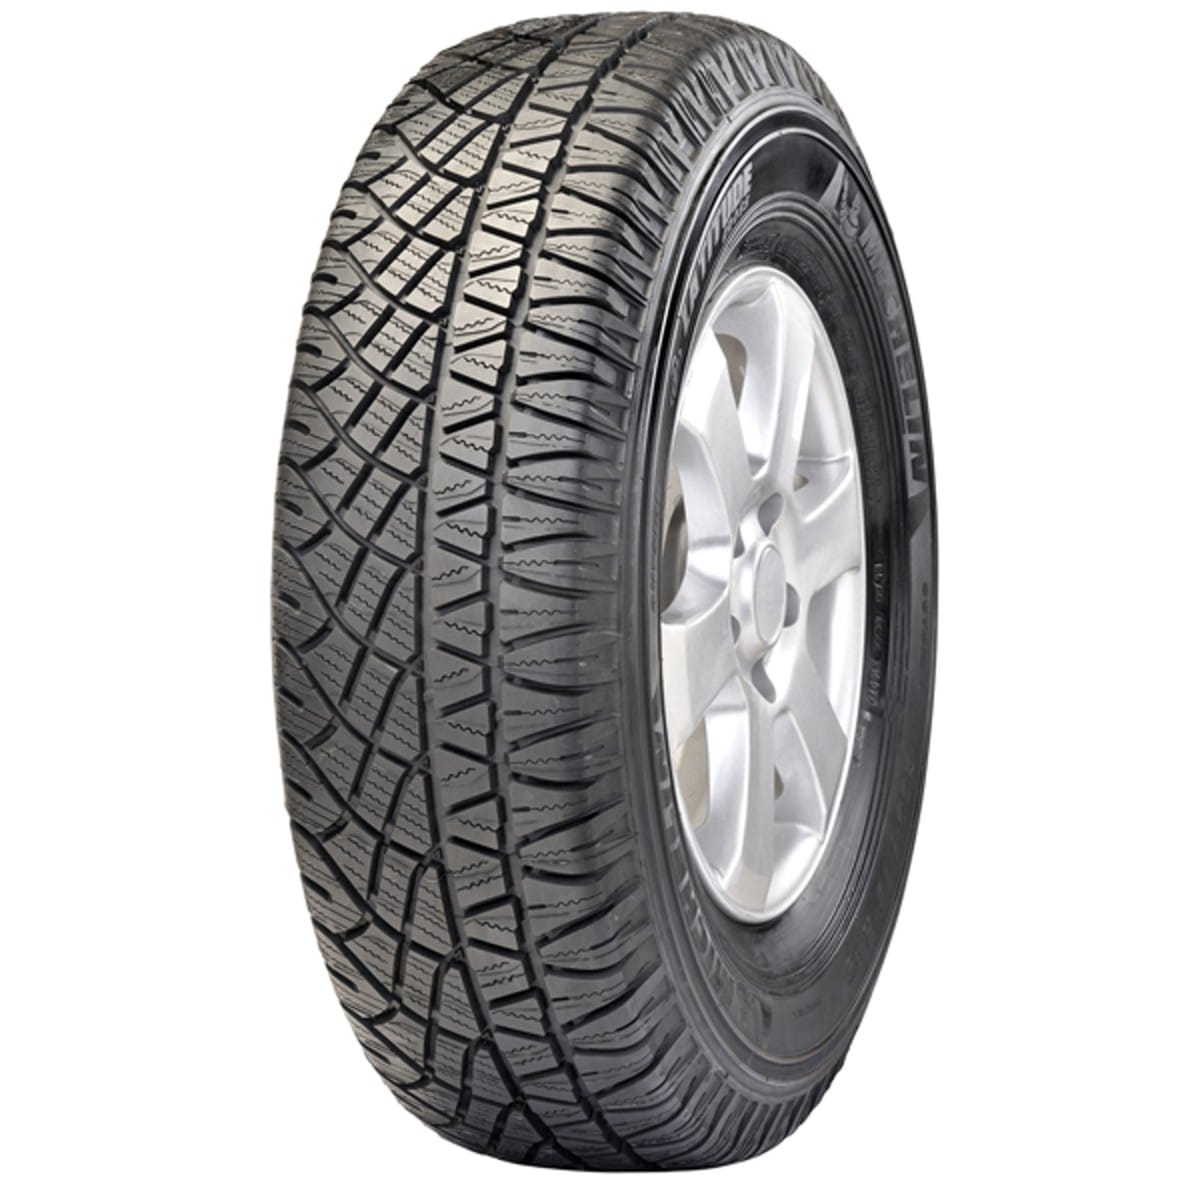 Gomme Nuove Michelin 225/70 R17 108T Latitudecross XL pneumatici nuovi Estivo